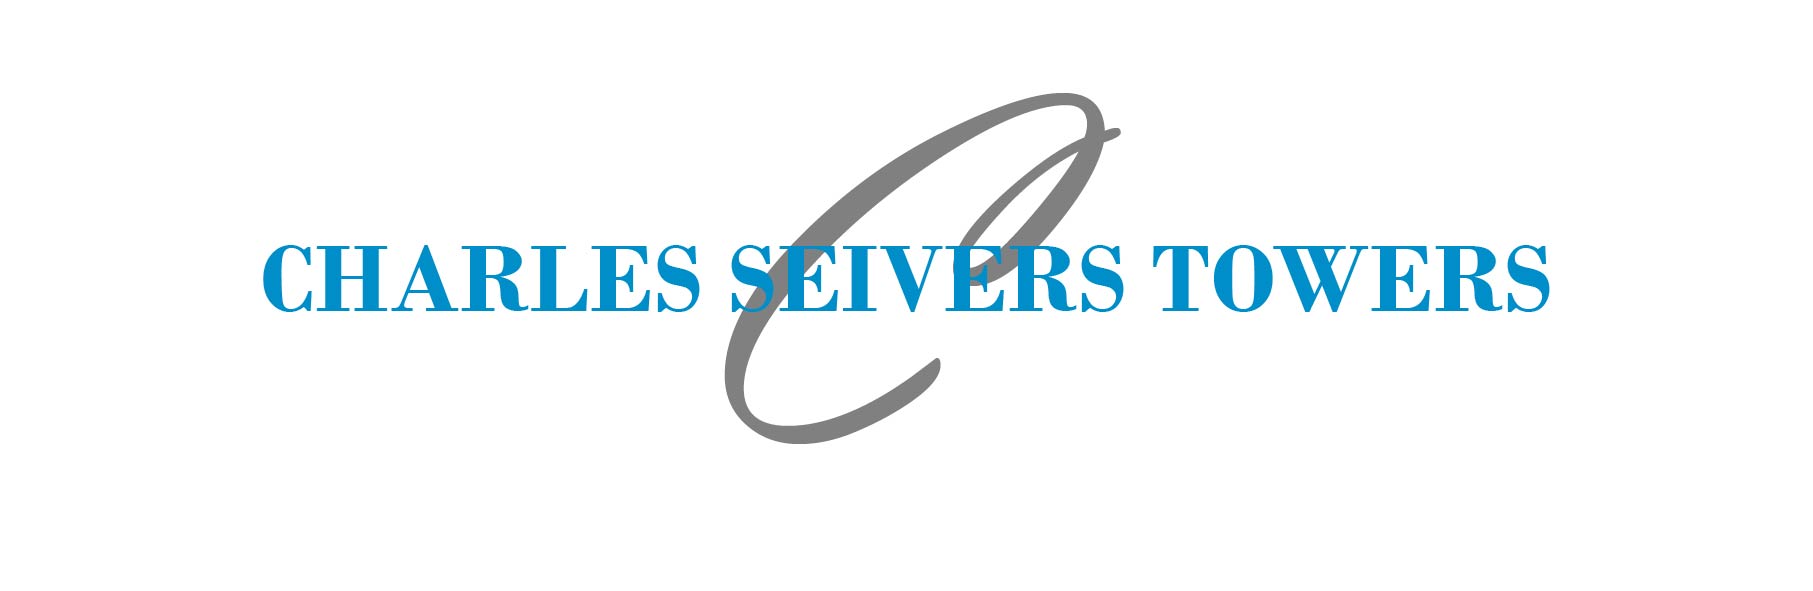 Charles Sievers Towers Logo